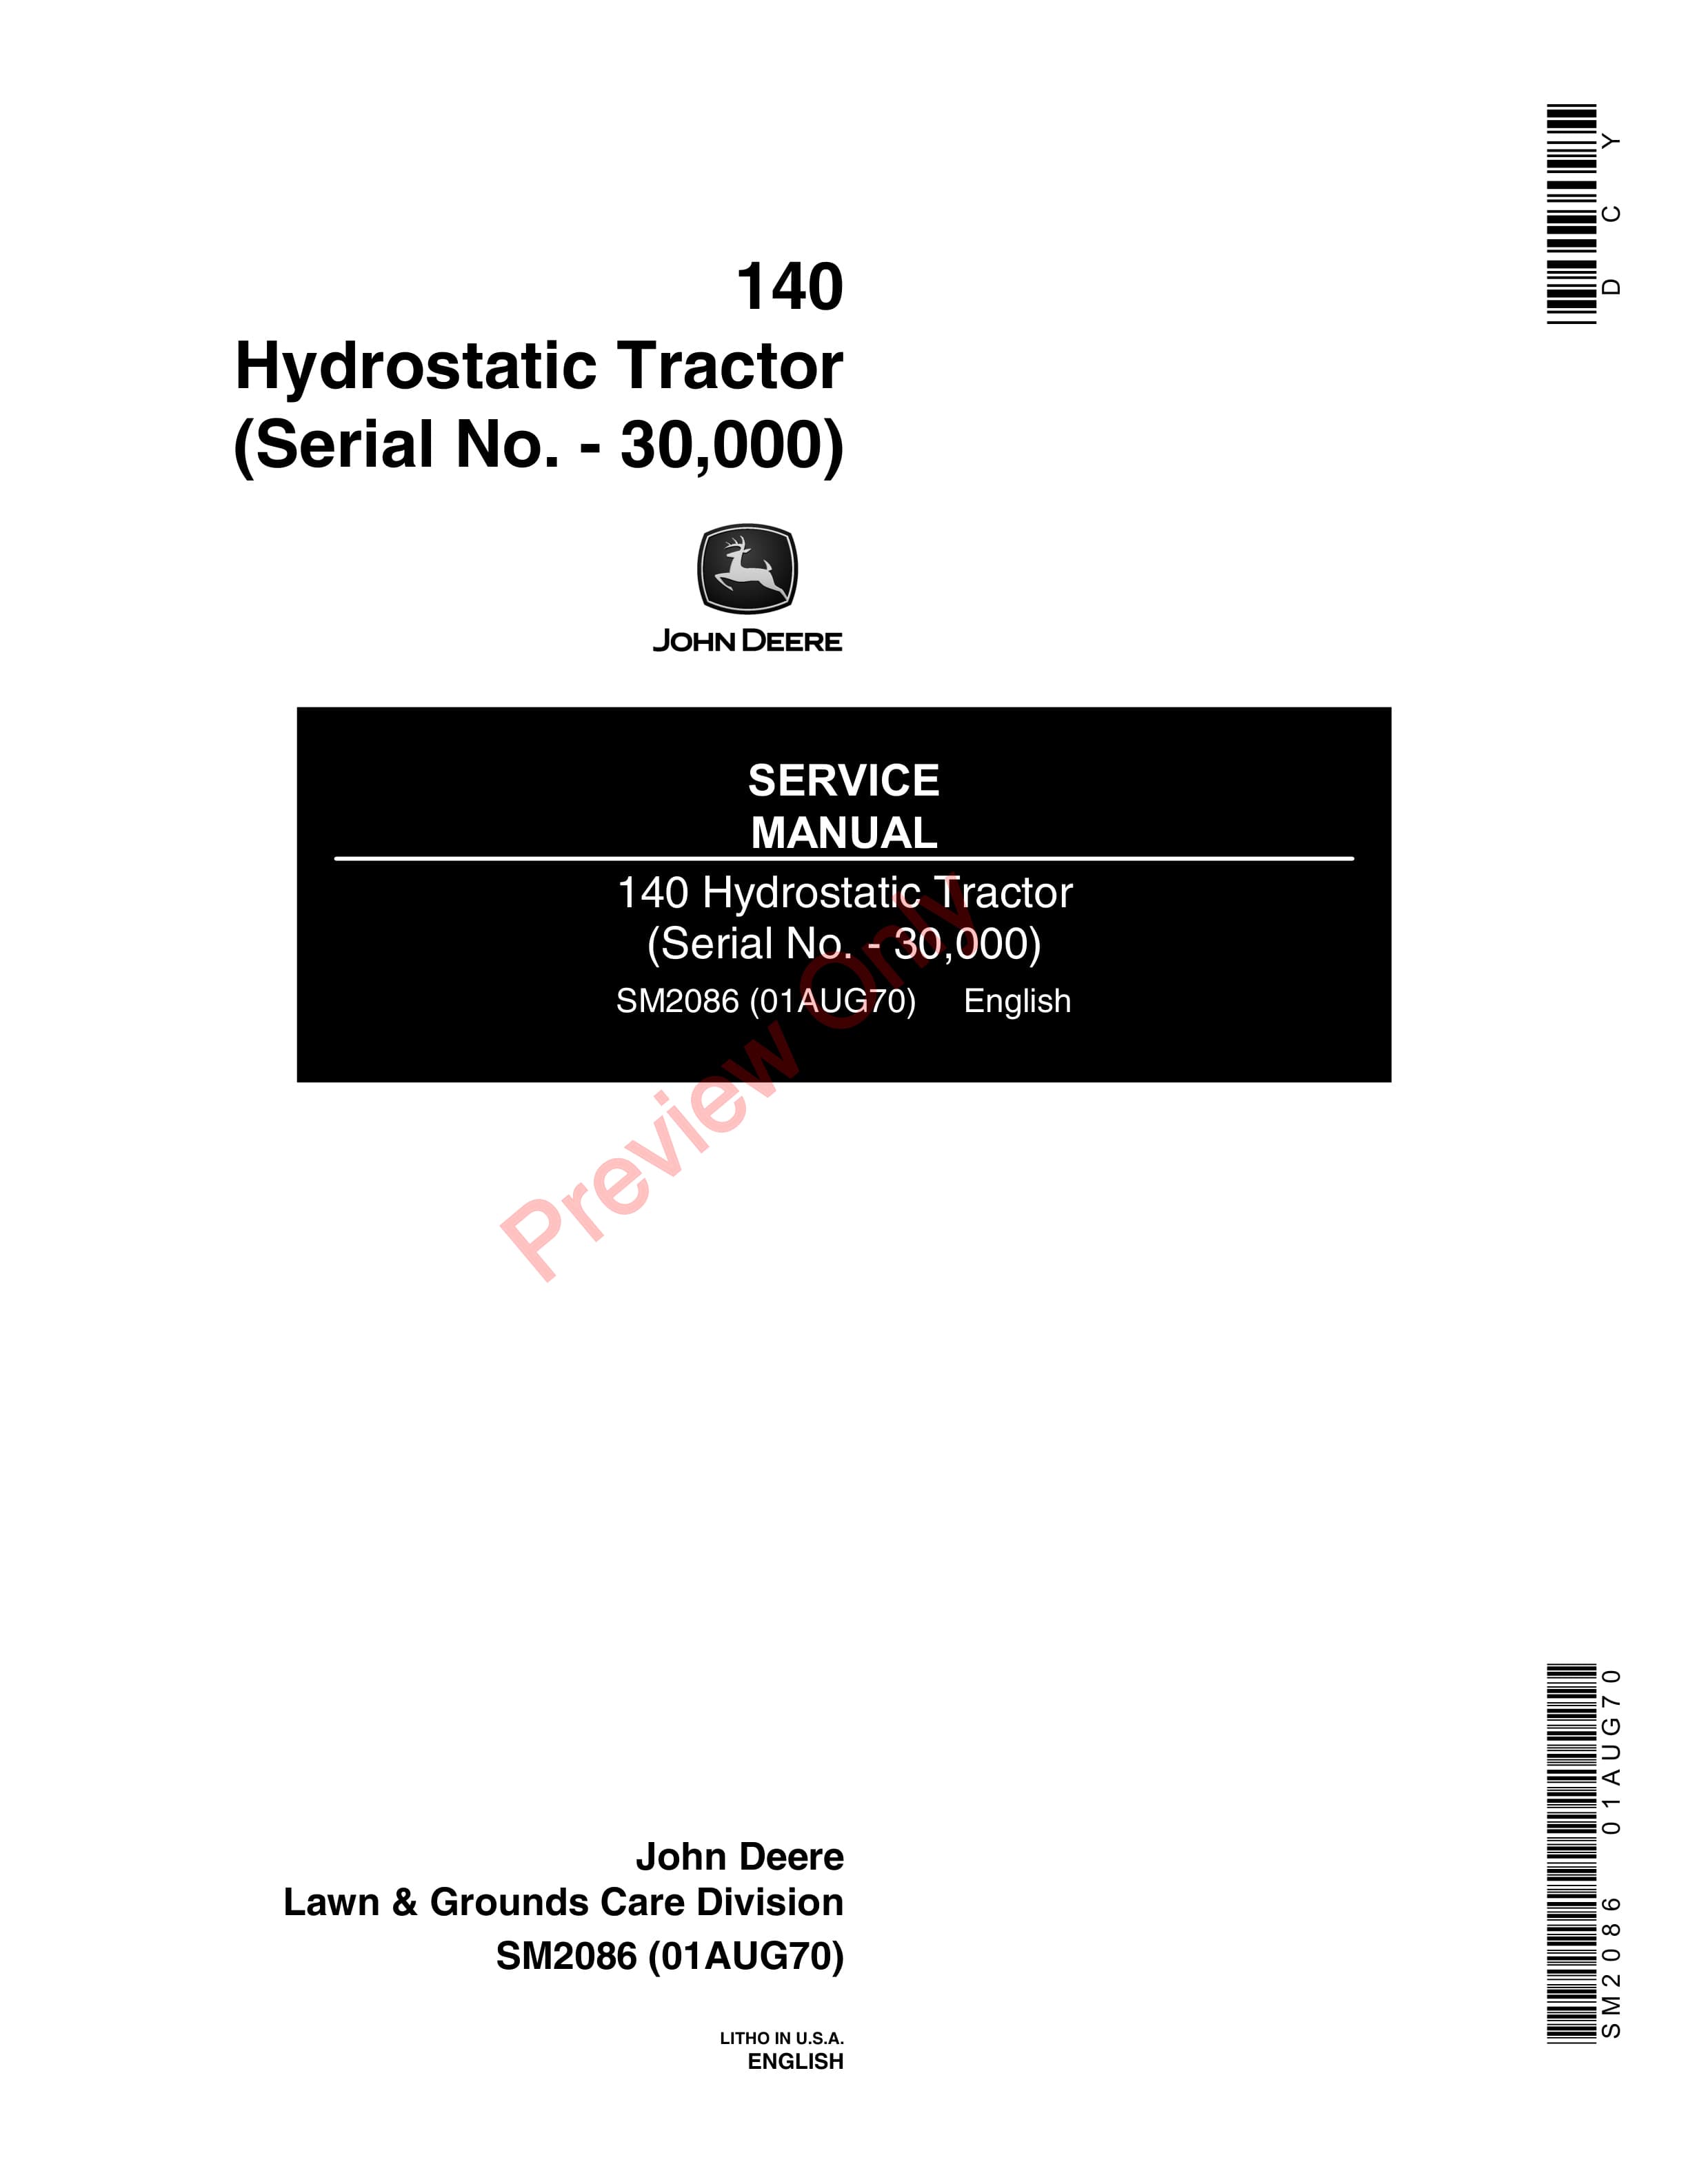 John Deere 140 Hydrostatic Tractor Service Manual SM2086 01AUG70-1